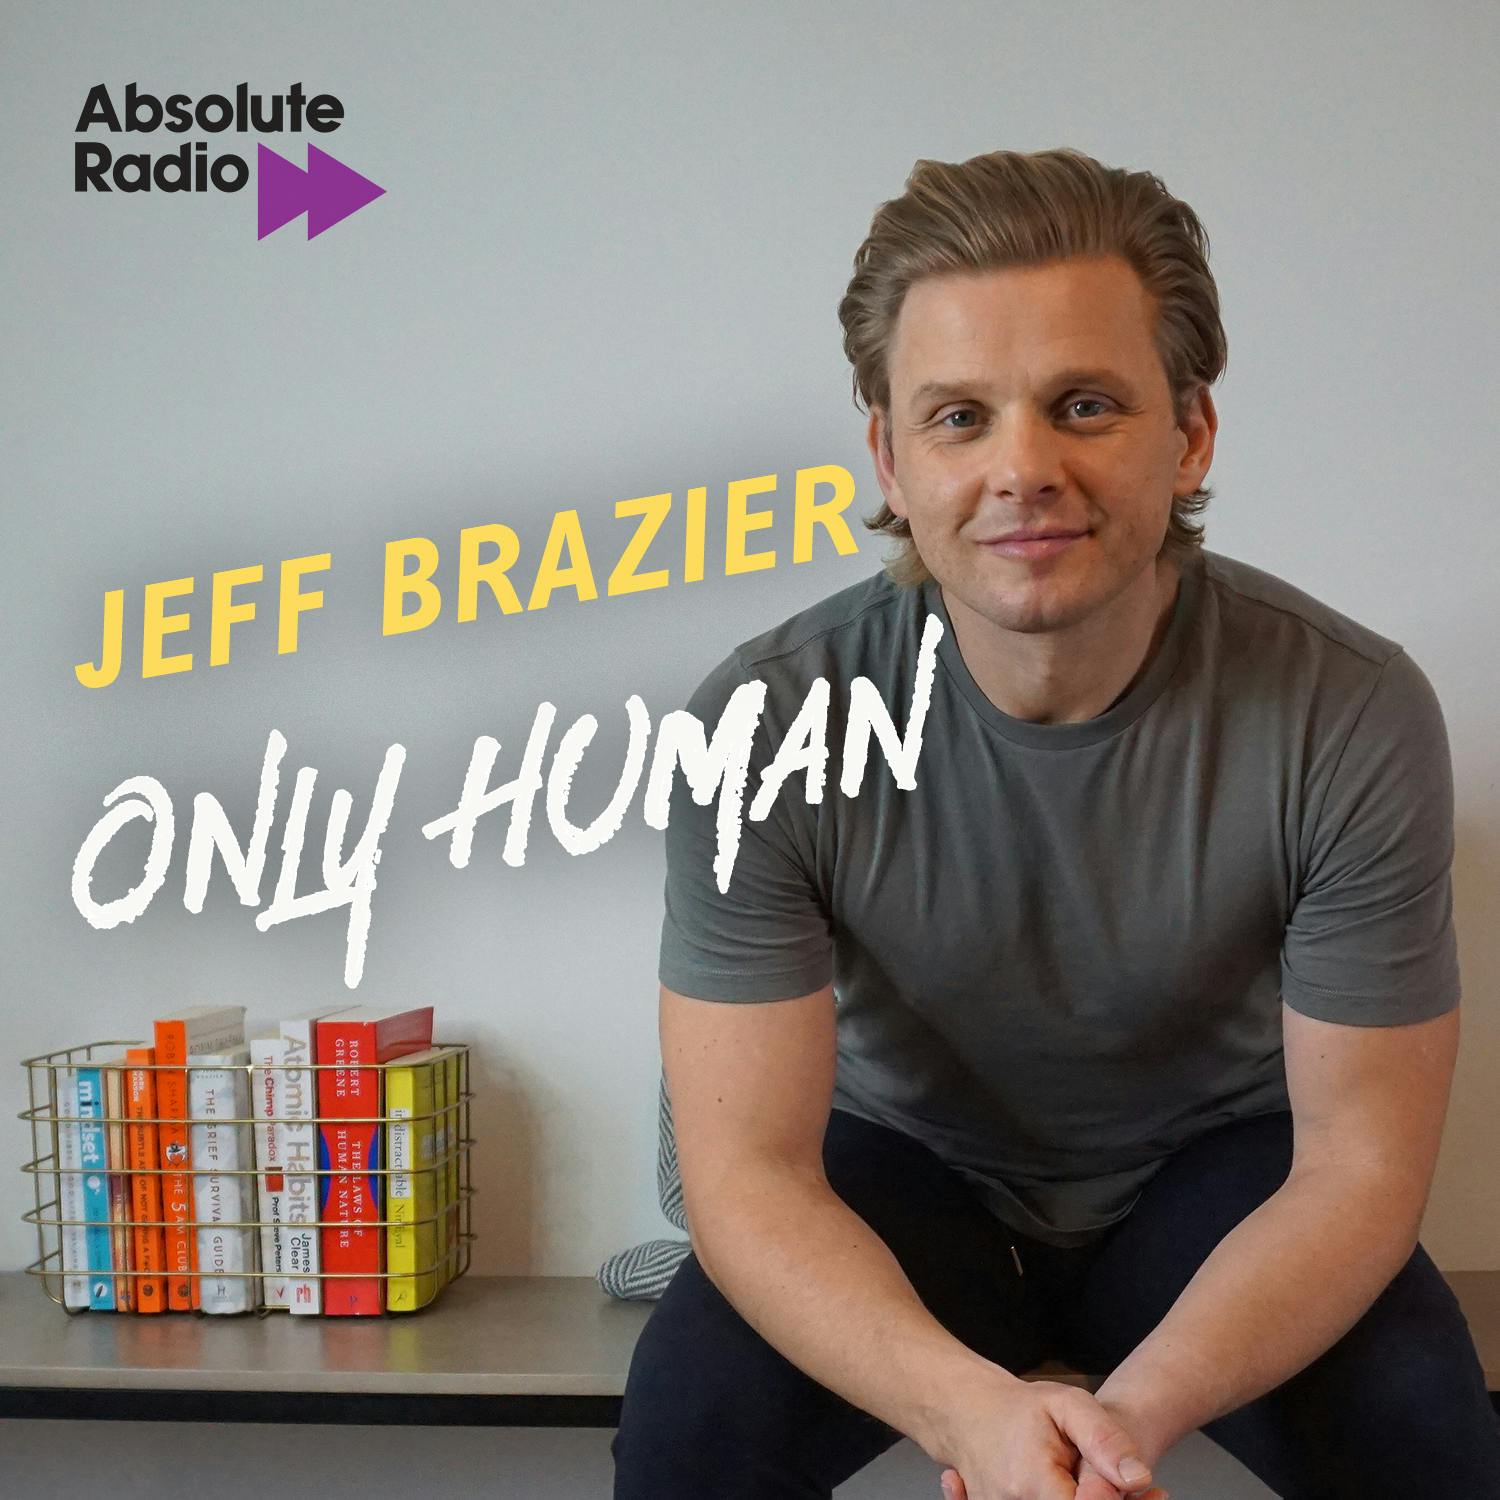 New season of Jeff Brazier - Only Human